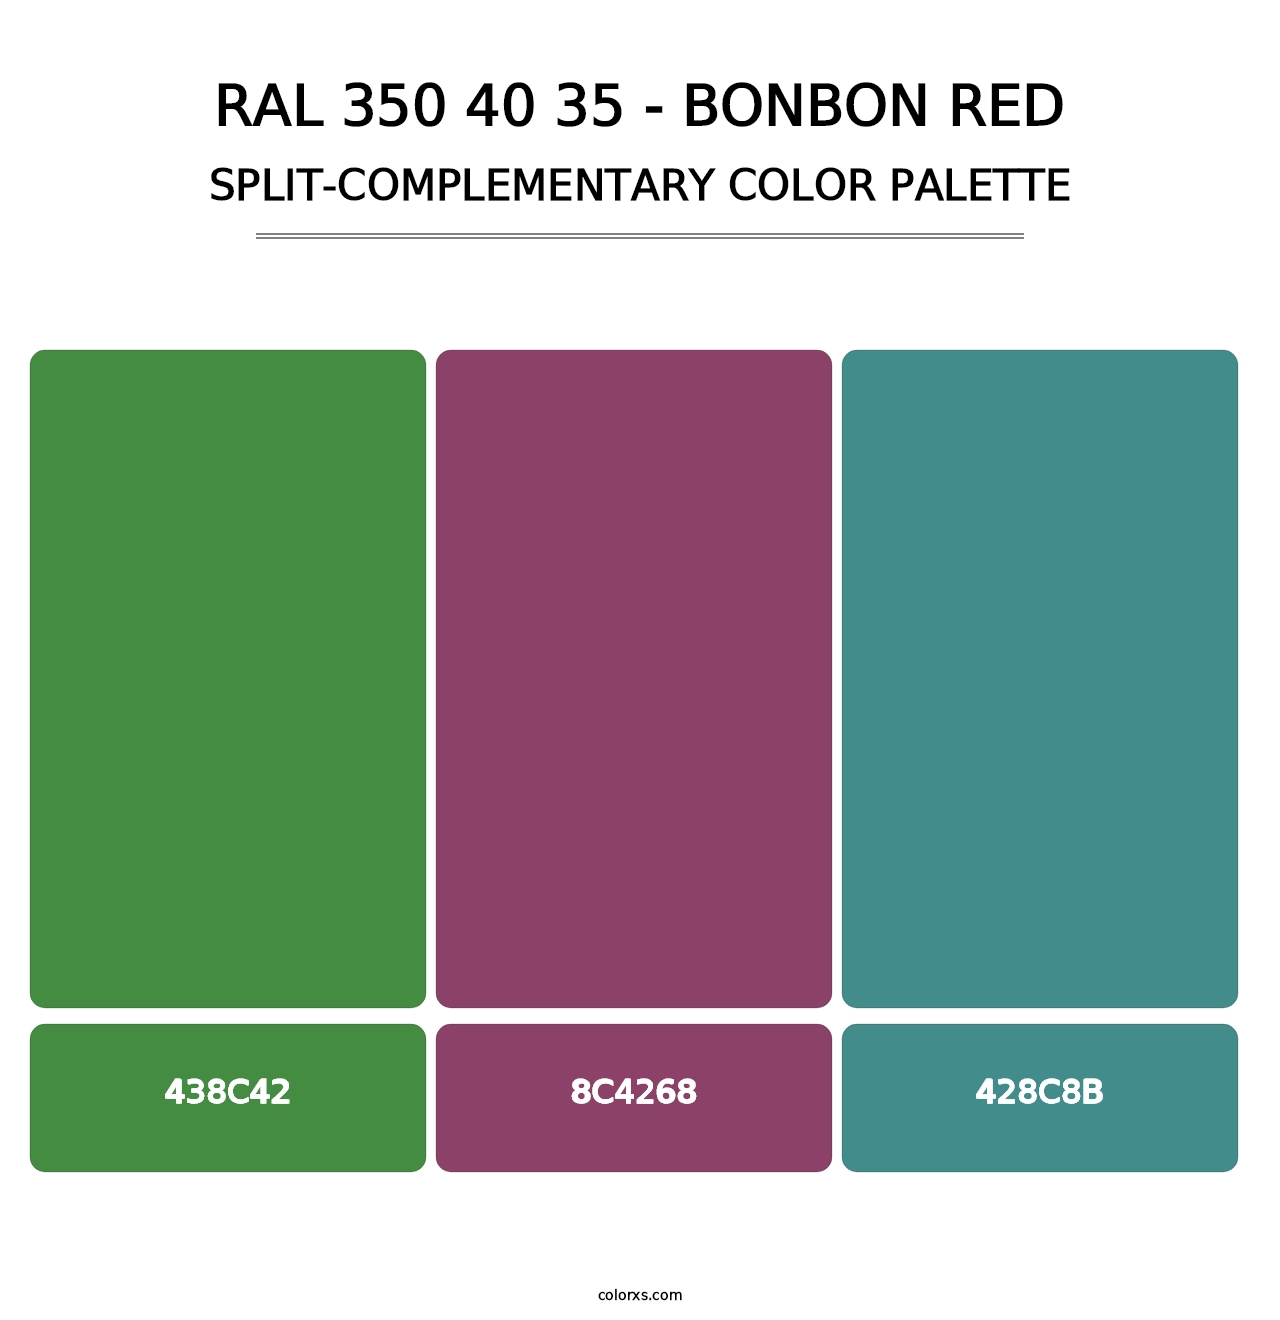 RAL 350 40 35 - Bonbon Red - Split-Complementary Color Palette